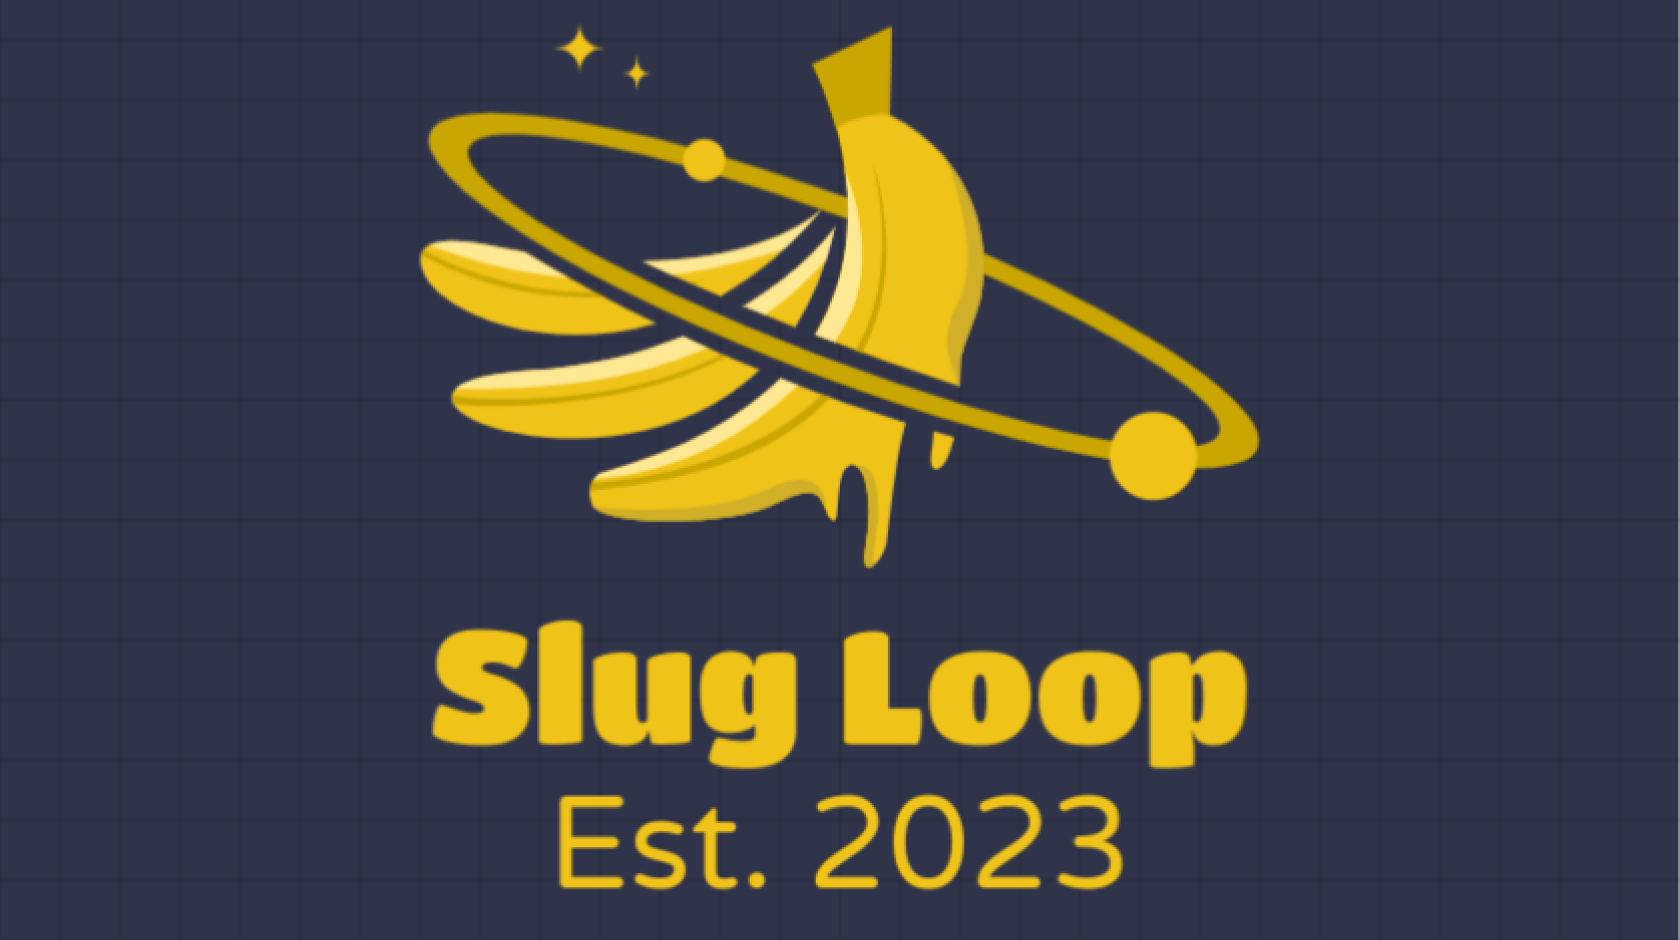 Slug Loop, Est 2023 beneath a logo of a banana with an orbit around it